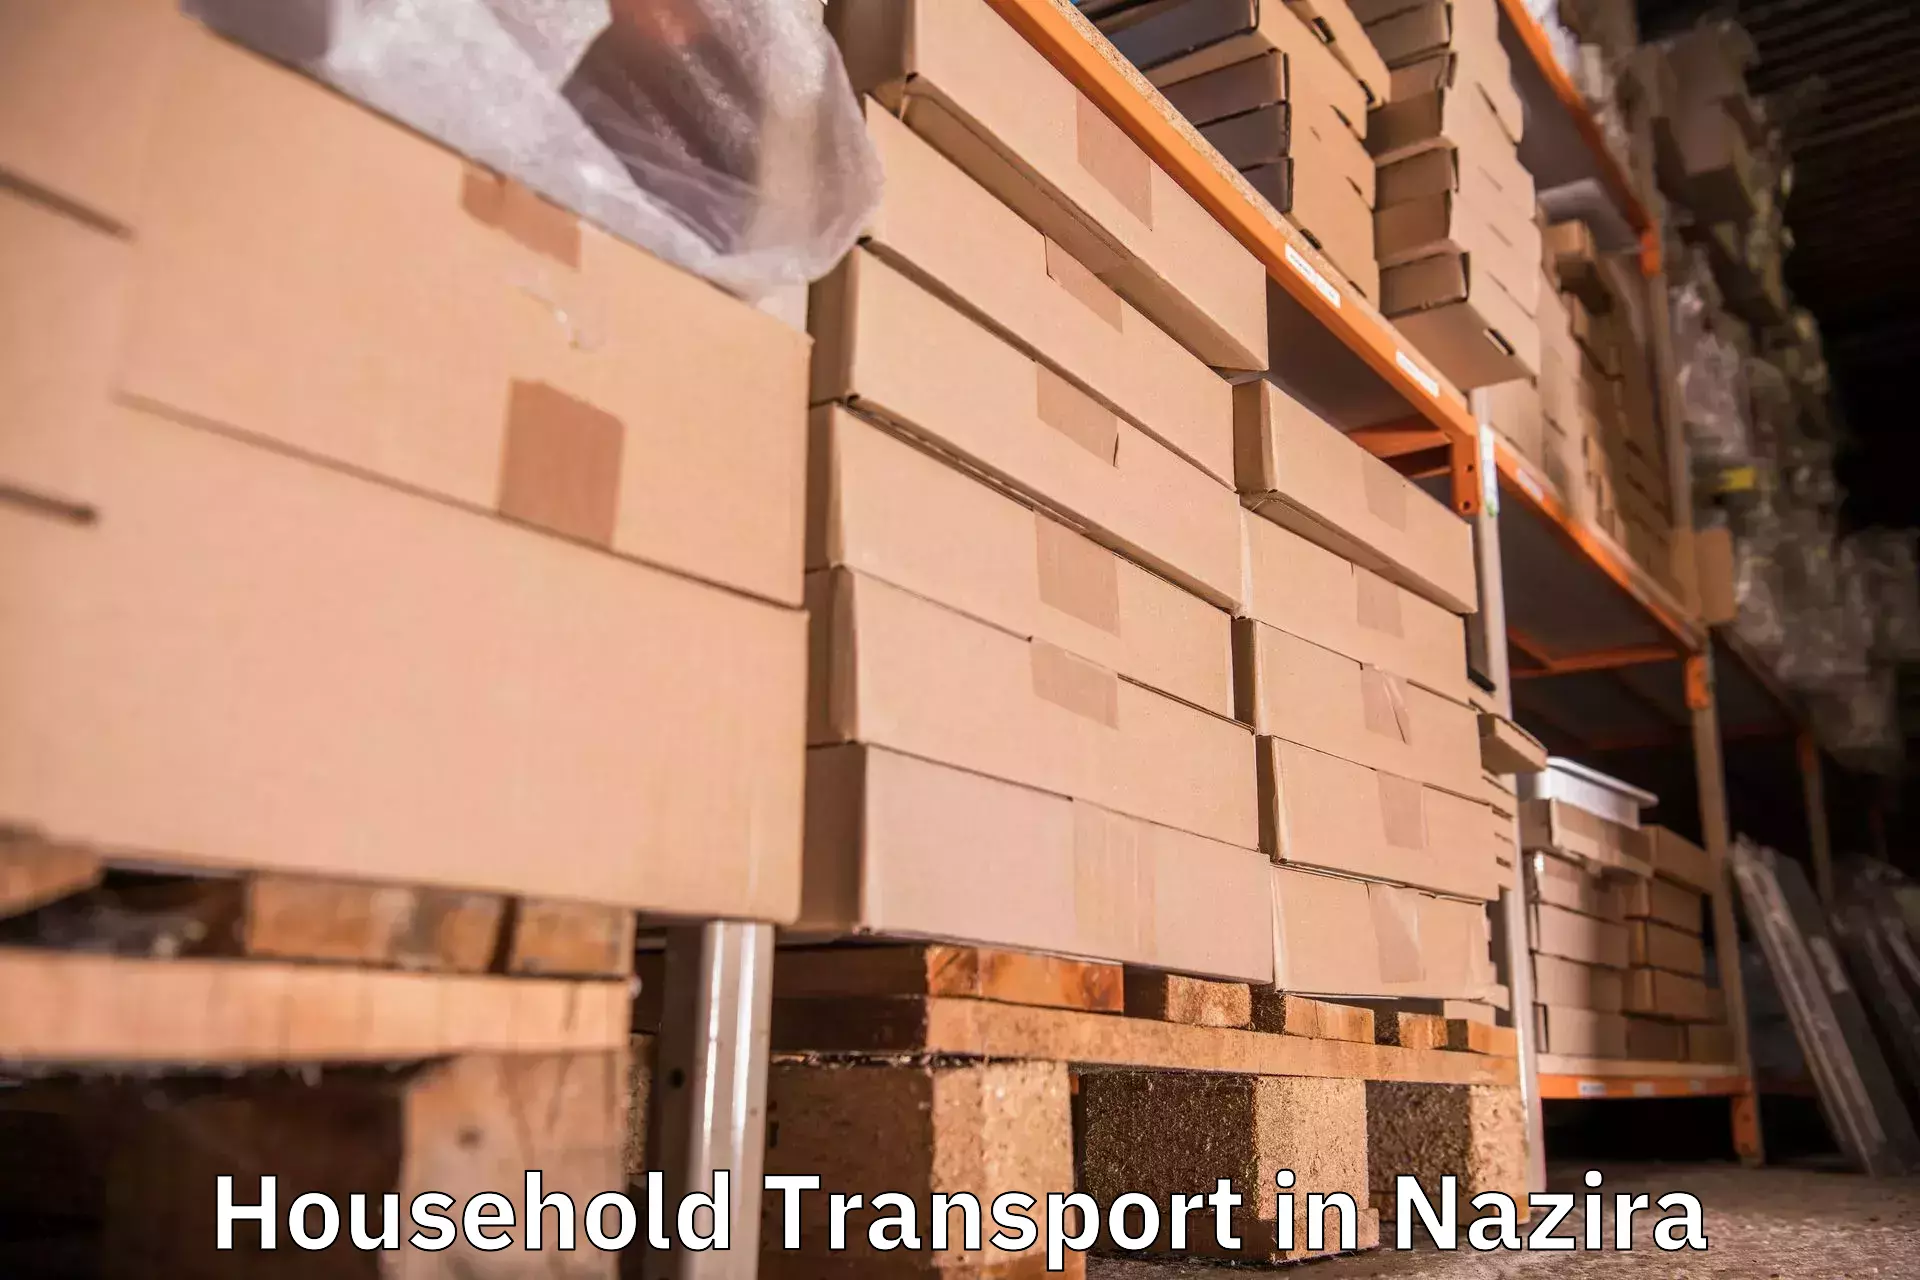 Quality household transport in Nazira